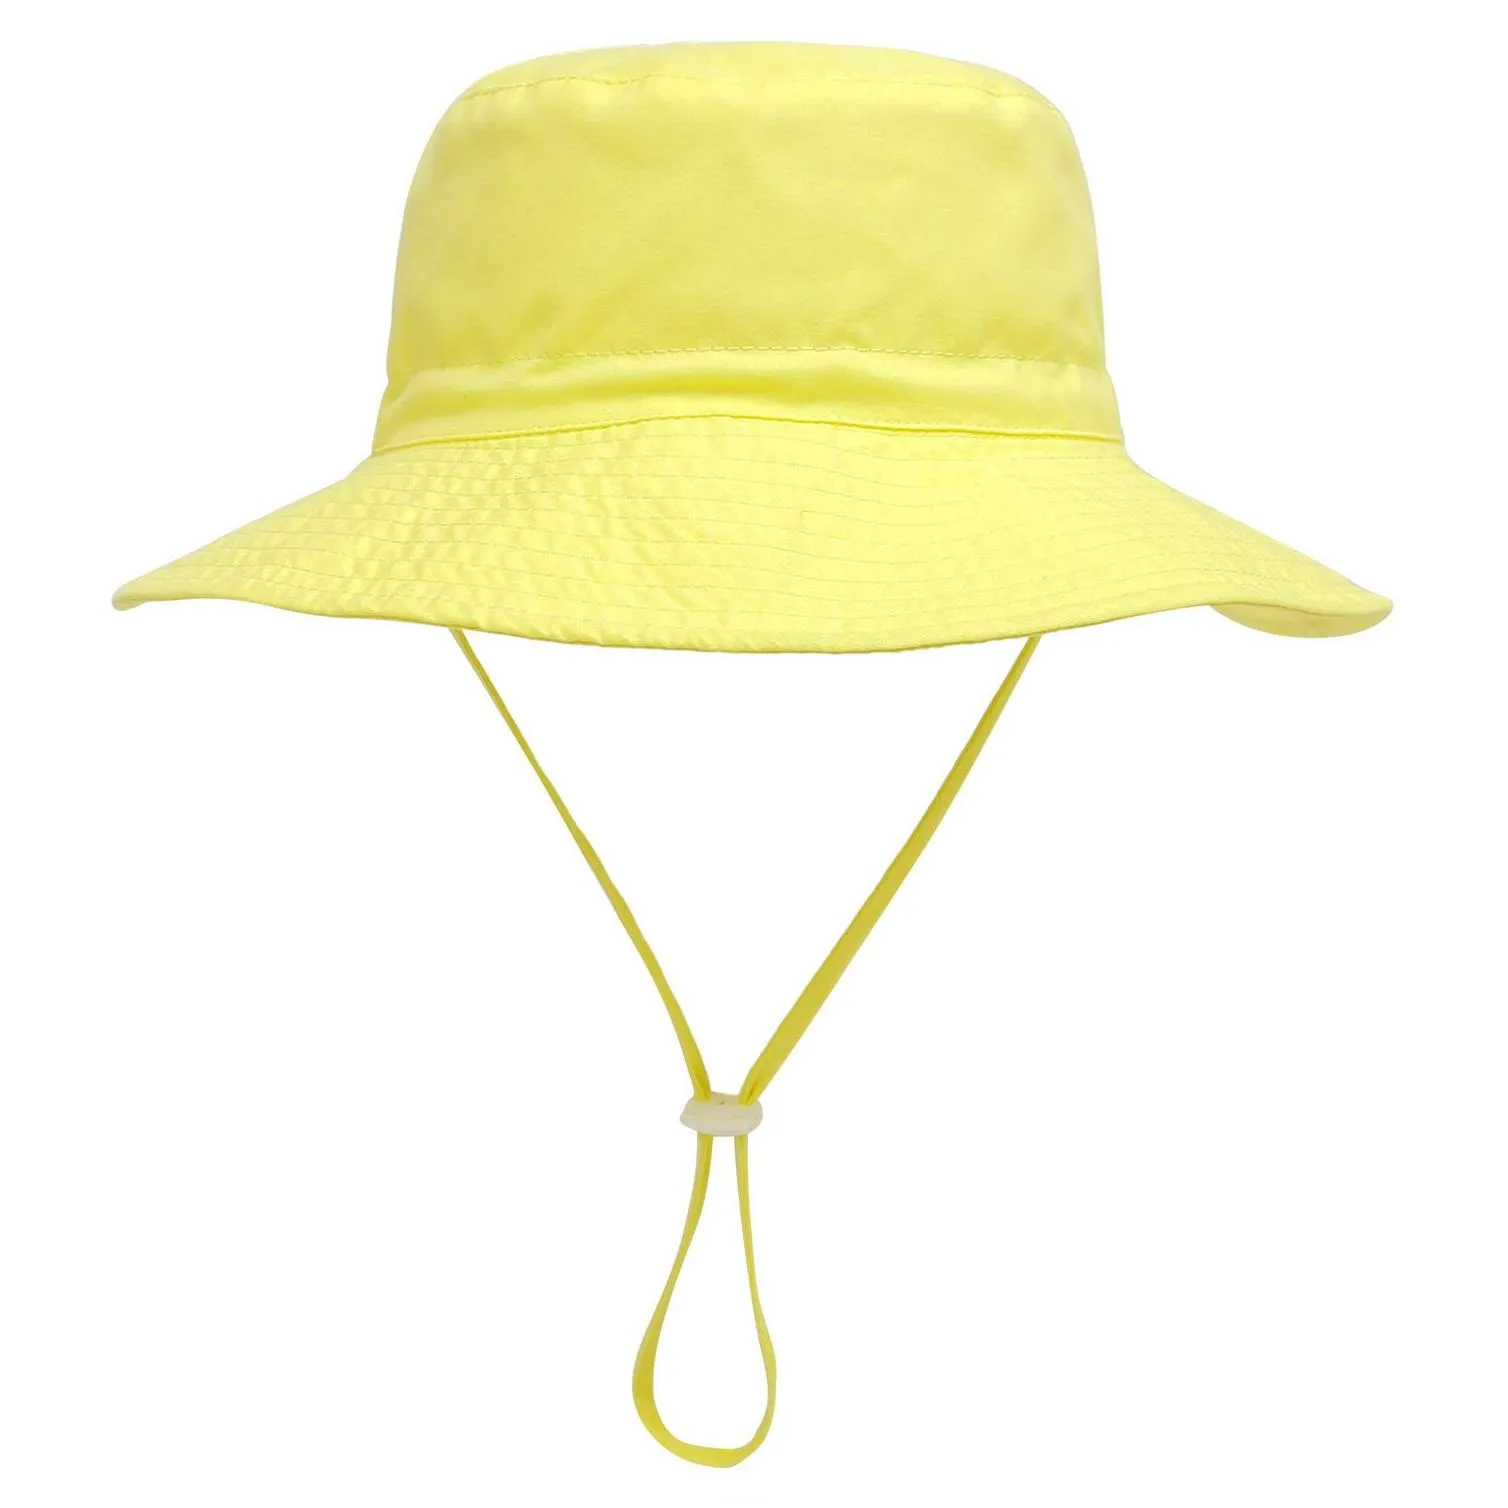 Designer Kids Fishing Hats 0-6 Years Baby Boys Girls Honey Flower Bucket Caps Quick Dry Cotton Sun Visor Childrens Breathable Foldable Spring Summer Beach Dress